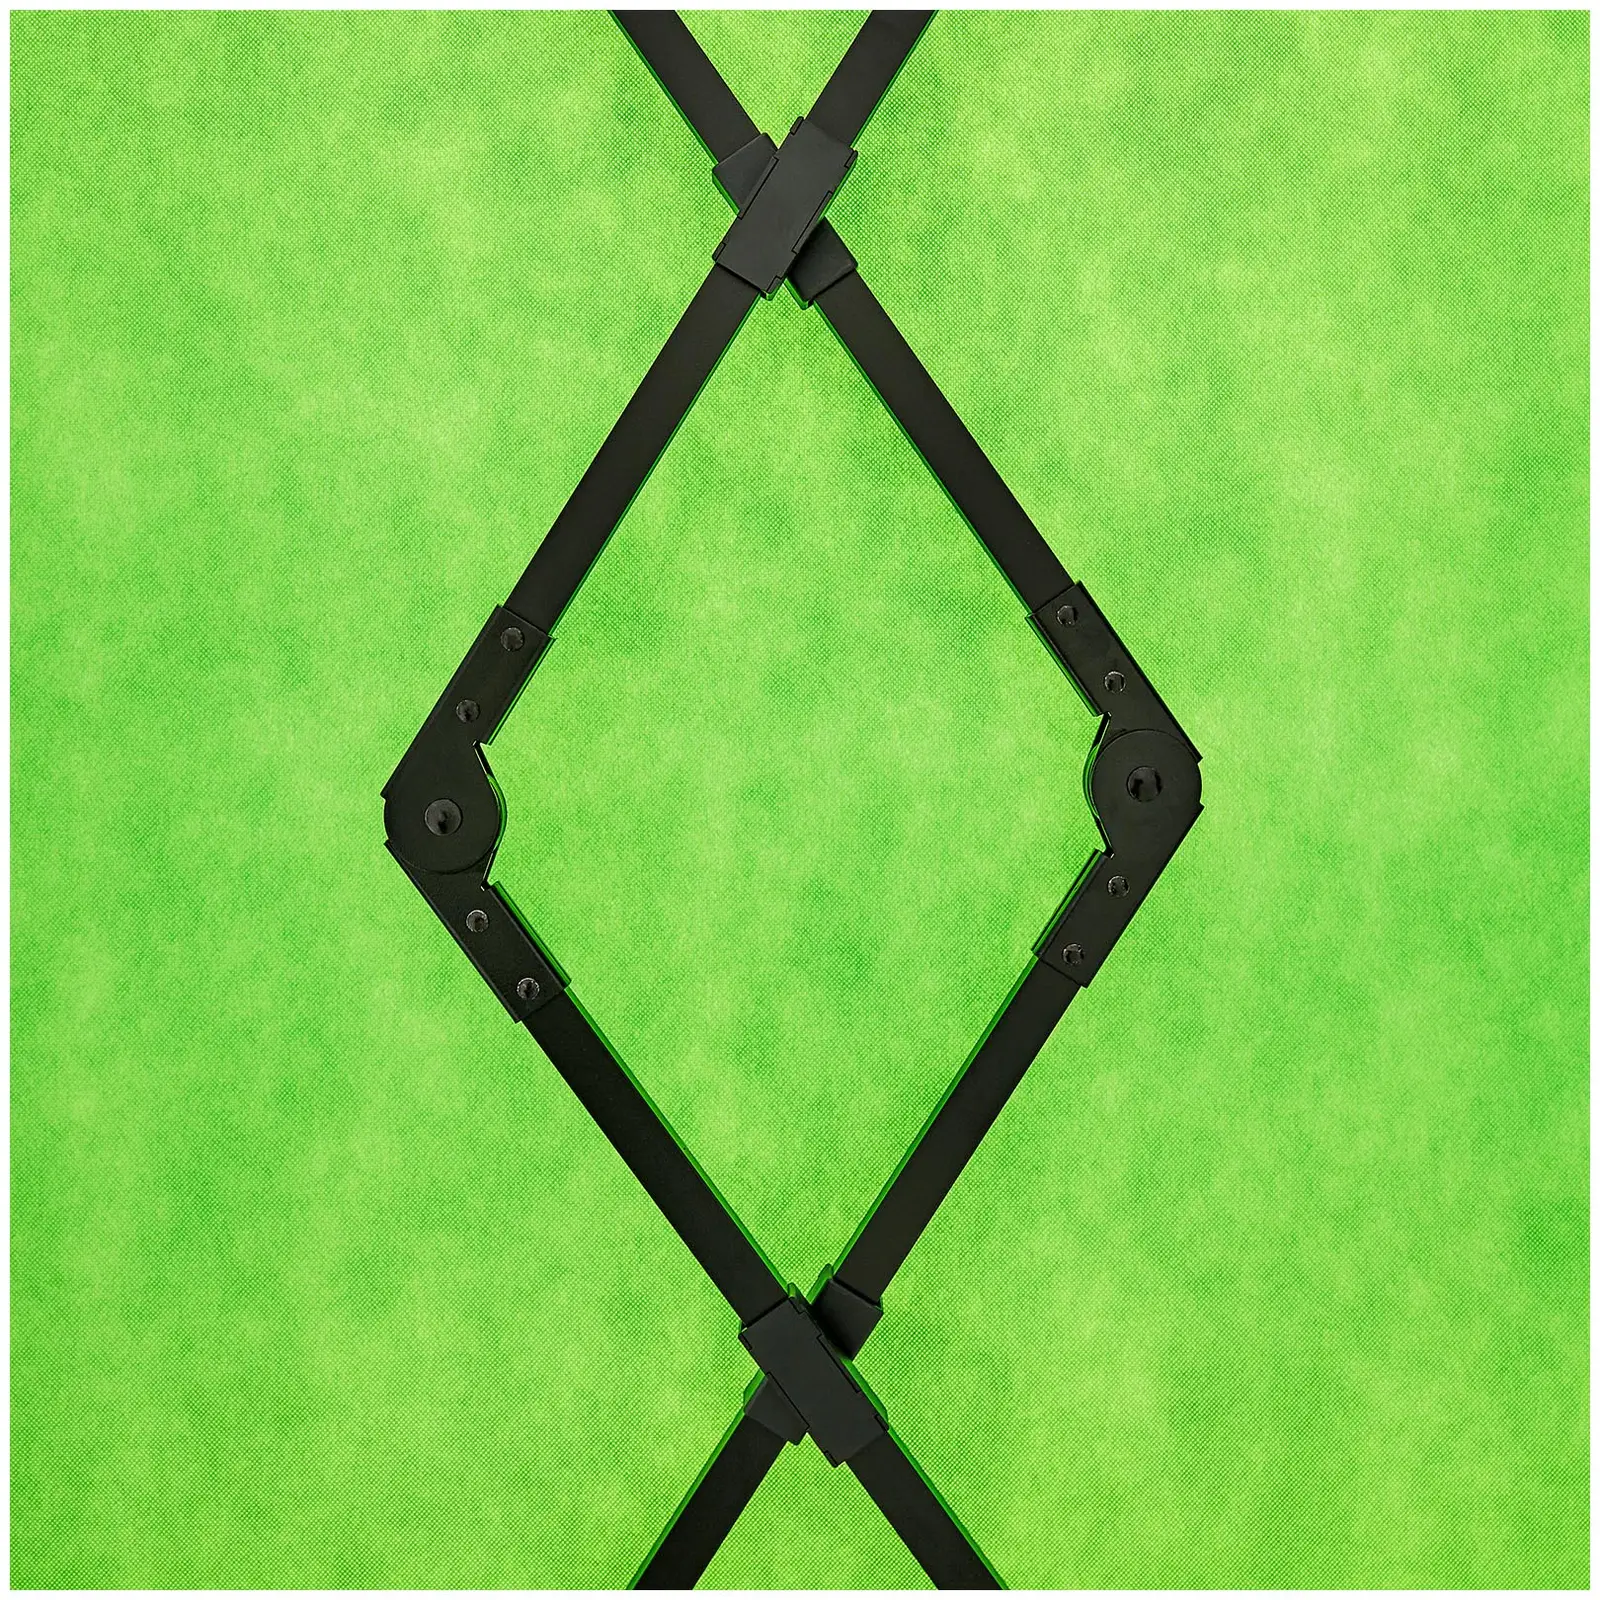 Zöld háttér - roll up - 135,5 x 199 cm